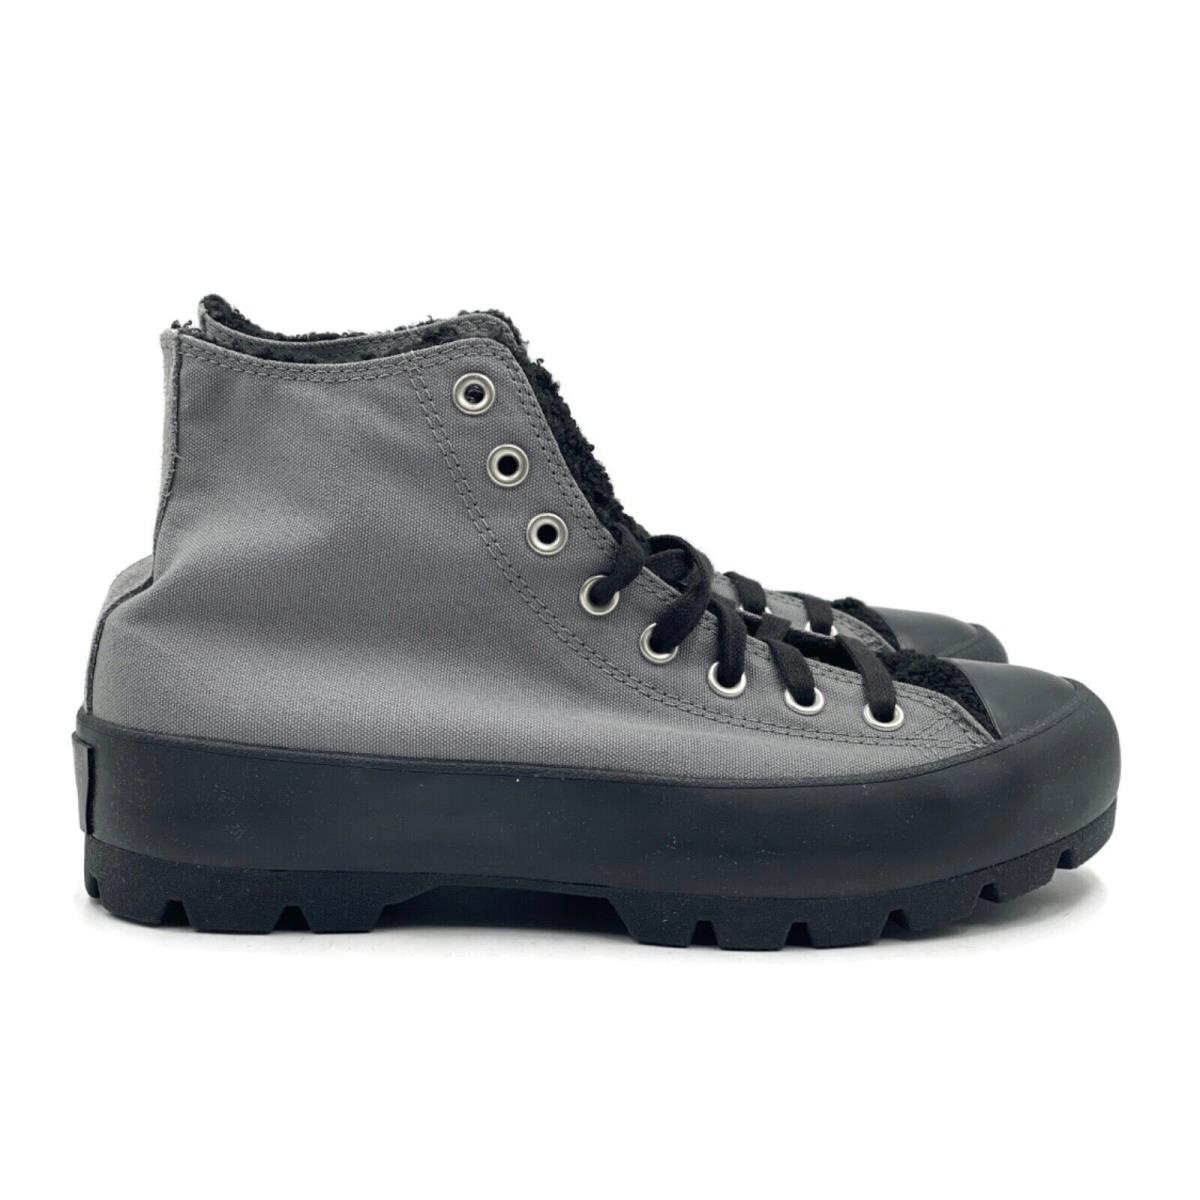 Converse Ctas Lugged Hi Sherpa Fur Women Casual Skate Shoe Gray Black Sneaker - Black Gray